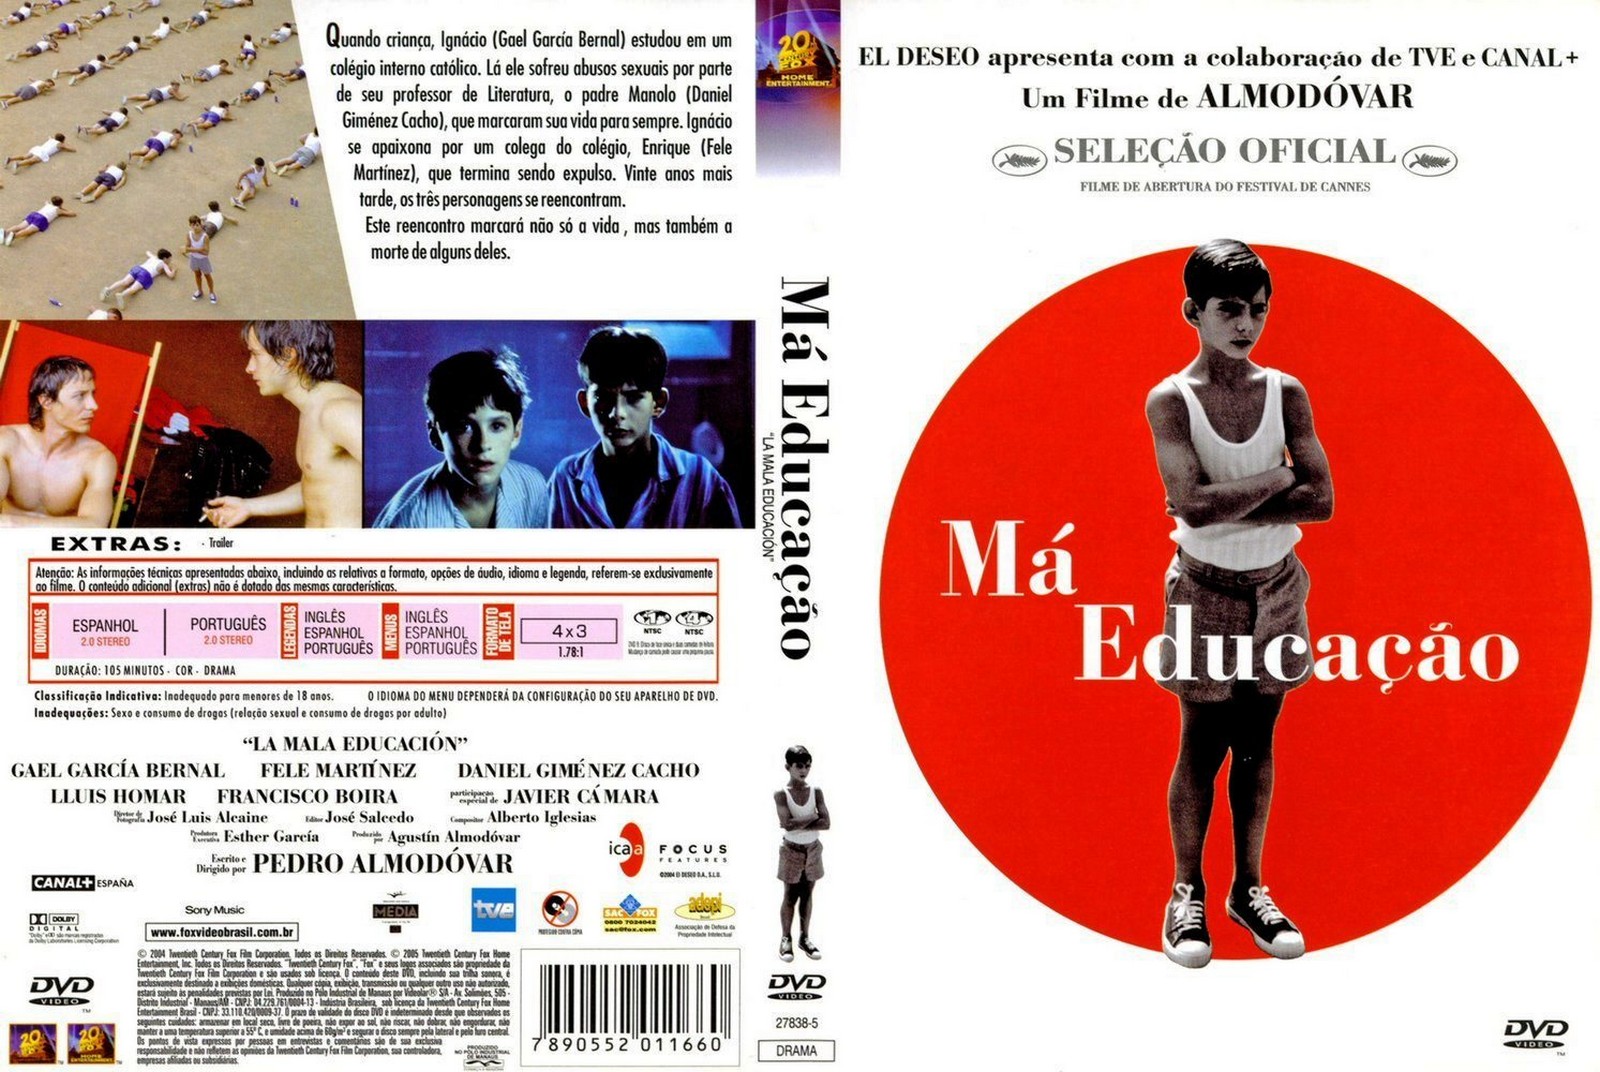 Má educação capa DVD0